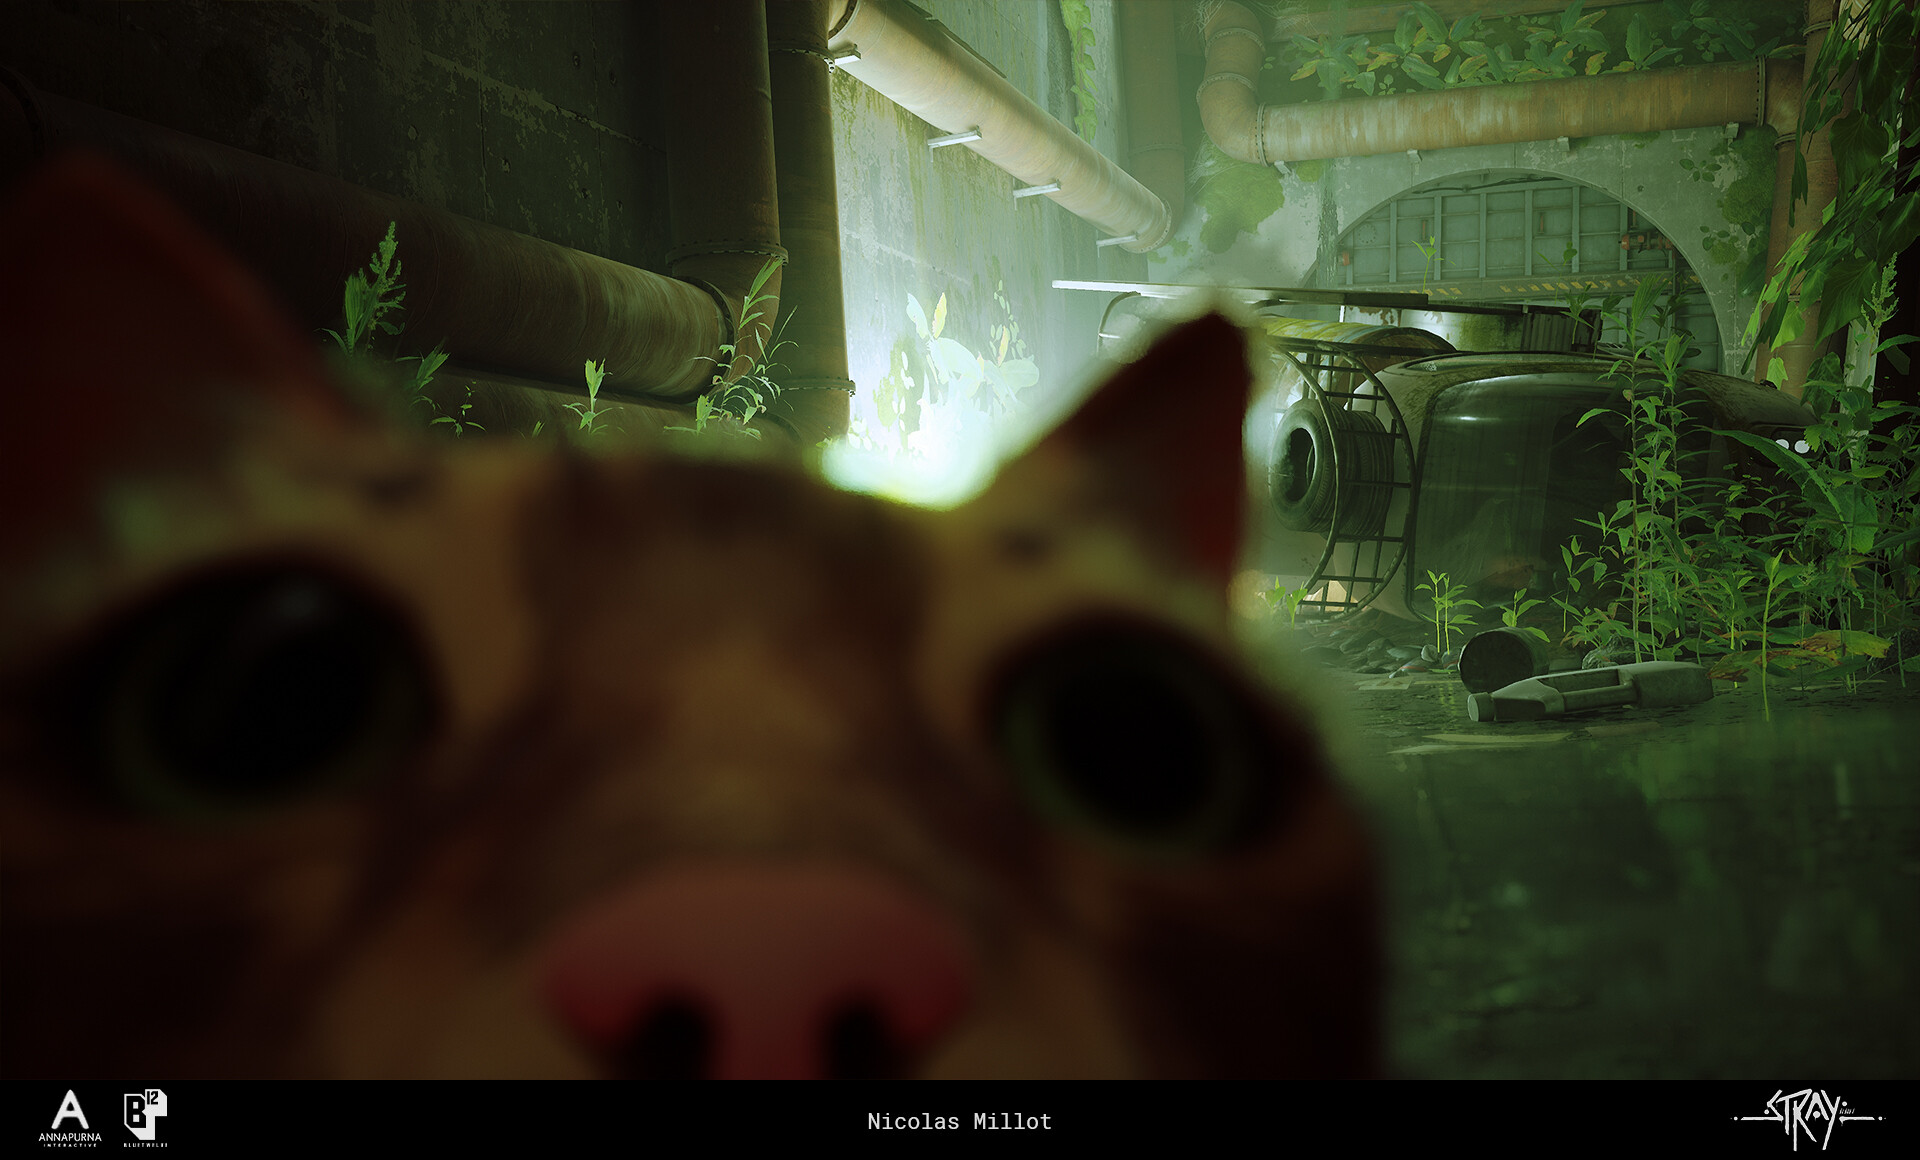 Stray Cats Cat Eyes ArtStation Nicolas Millot Video Games 1920x1160